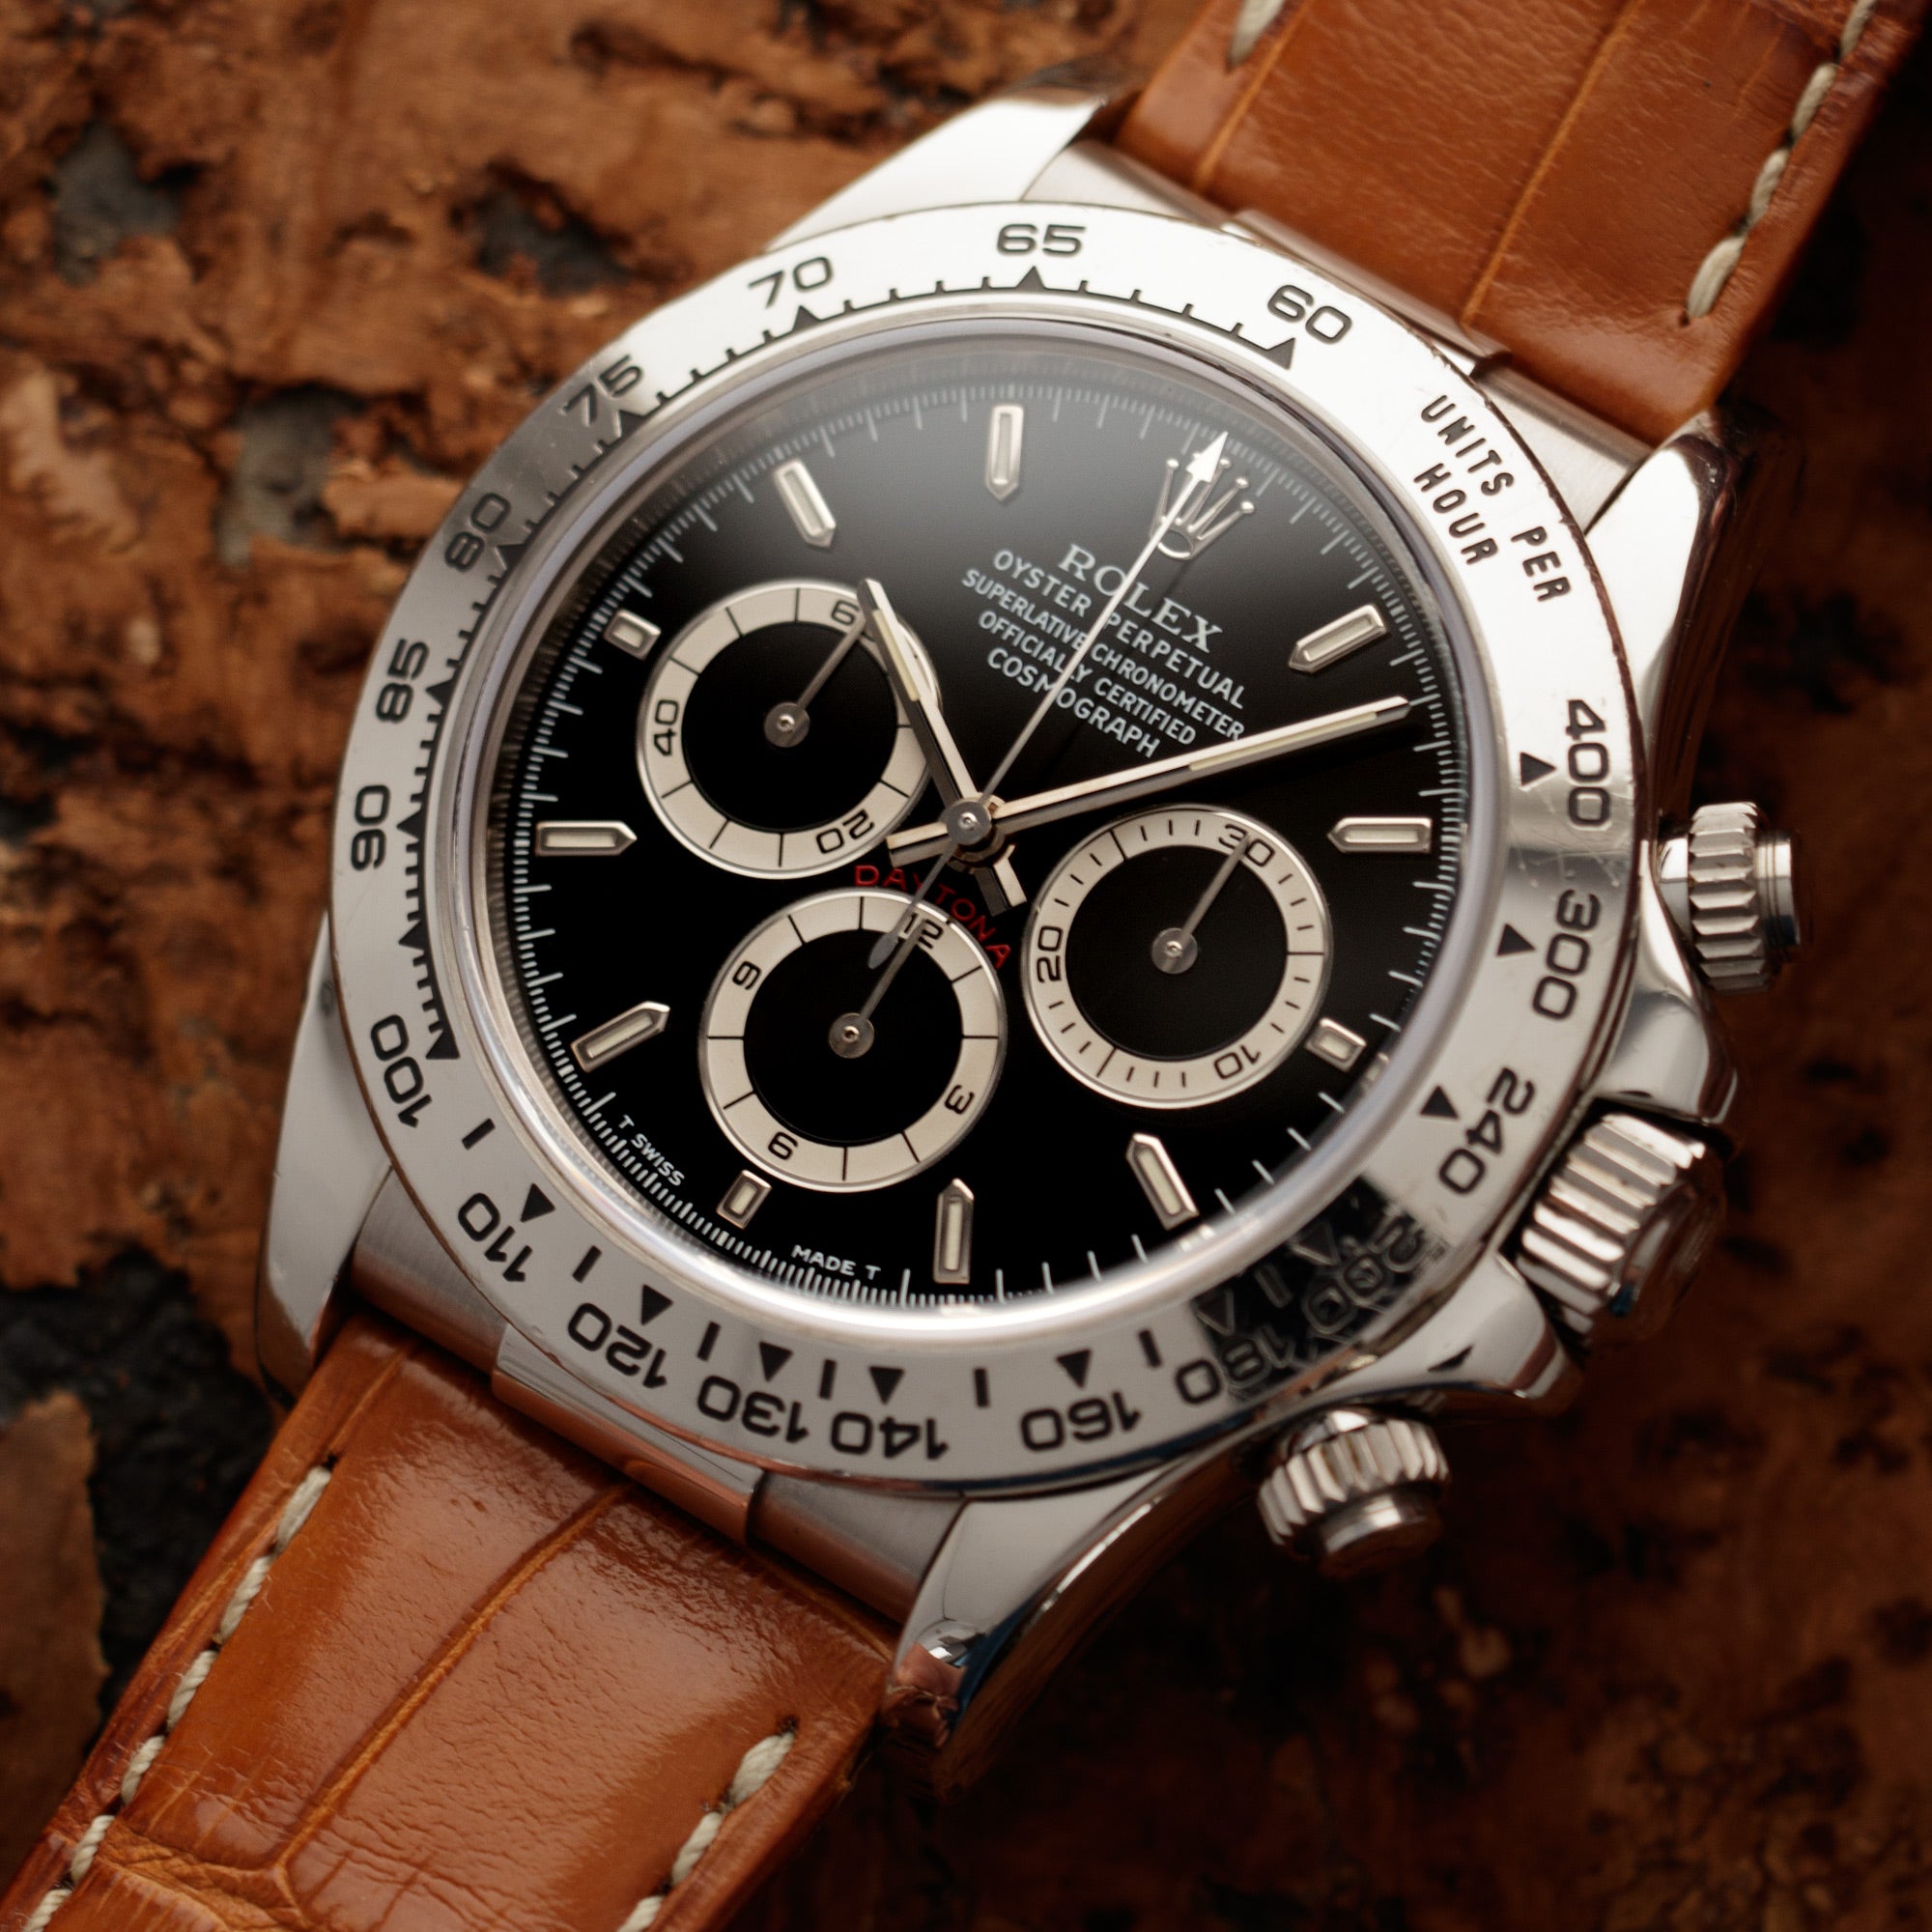 Rolex - Rolex White Gold Cosmograph Daytona Ref. 16519 - The Keystone Watches